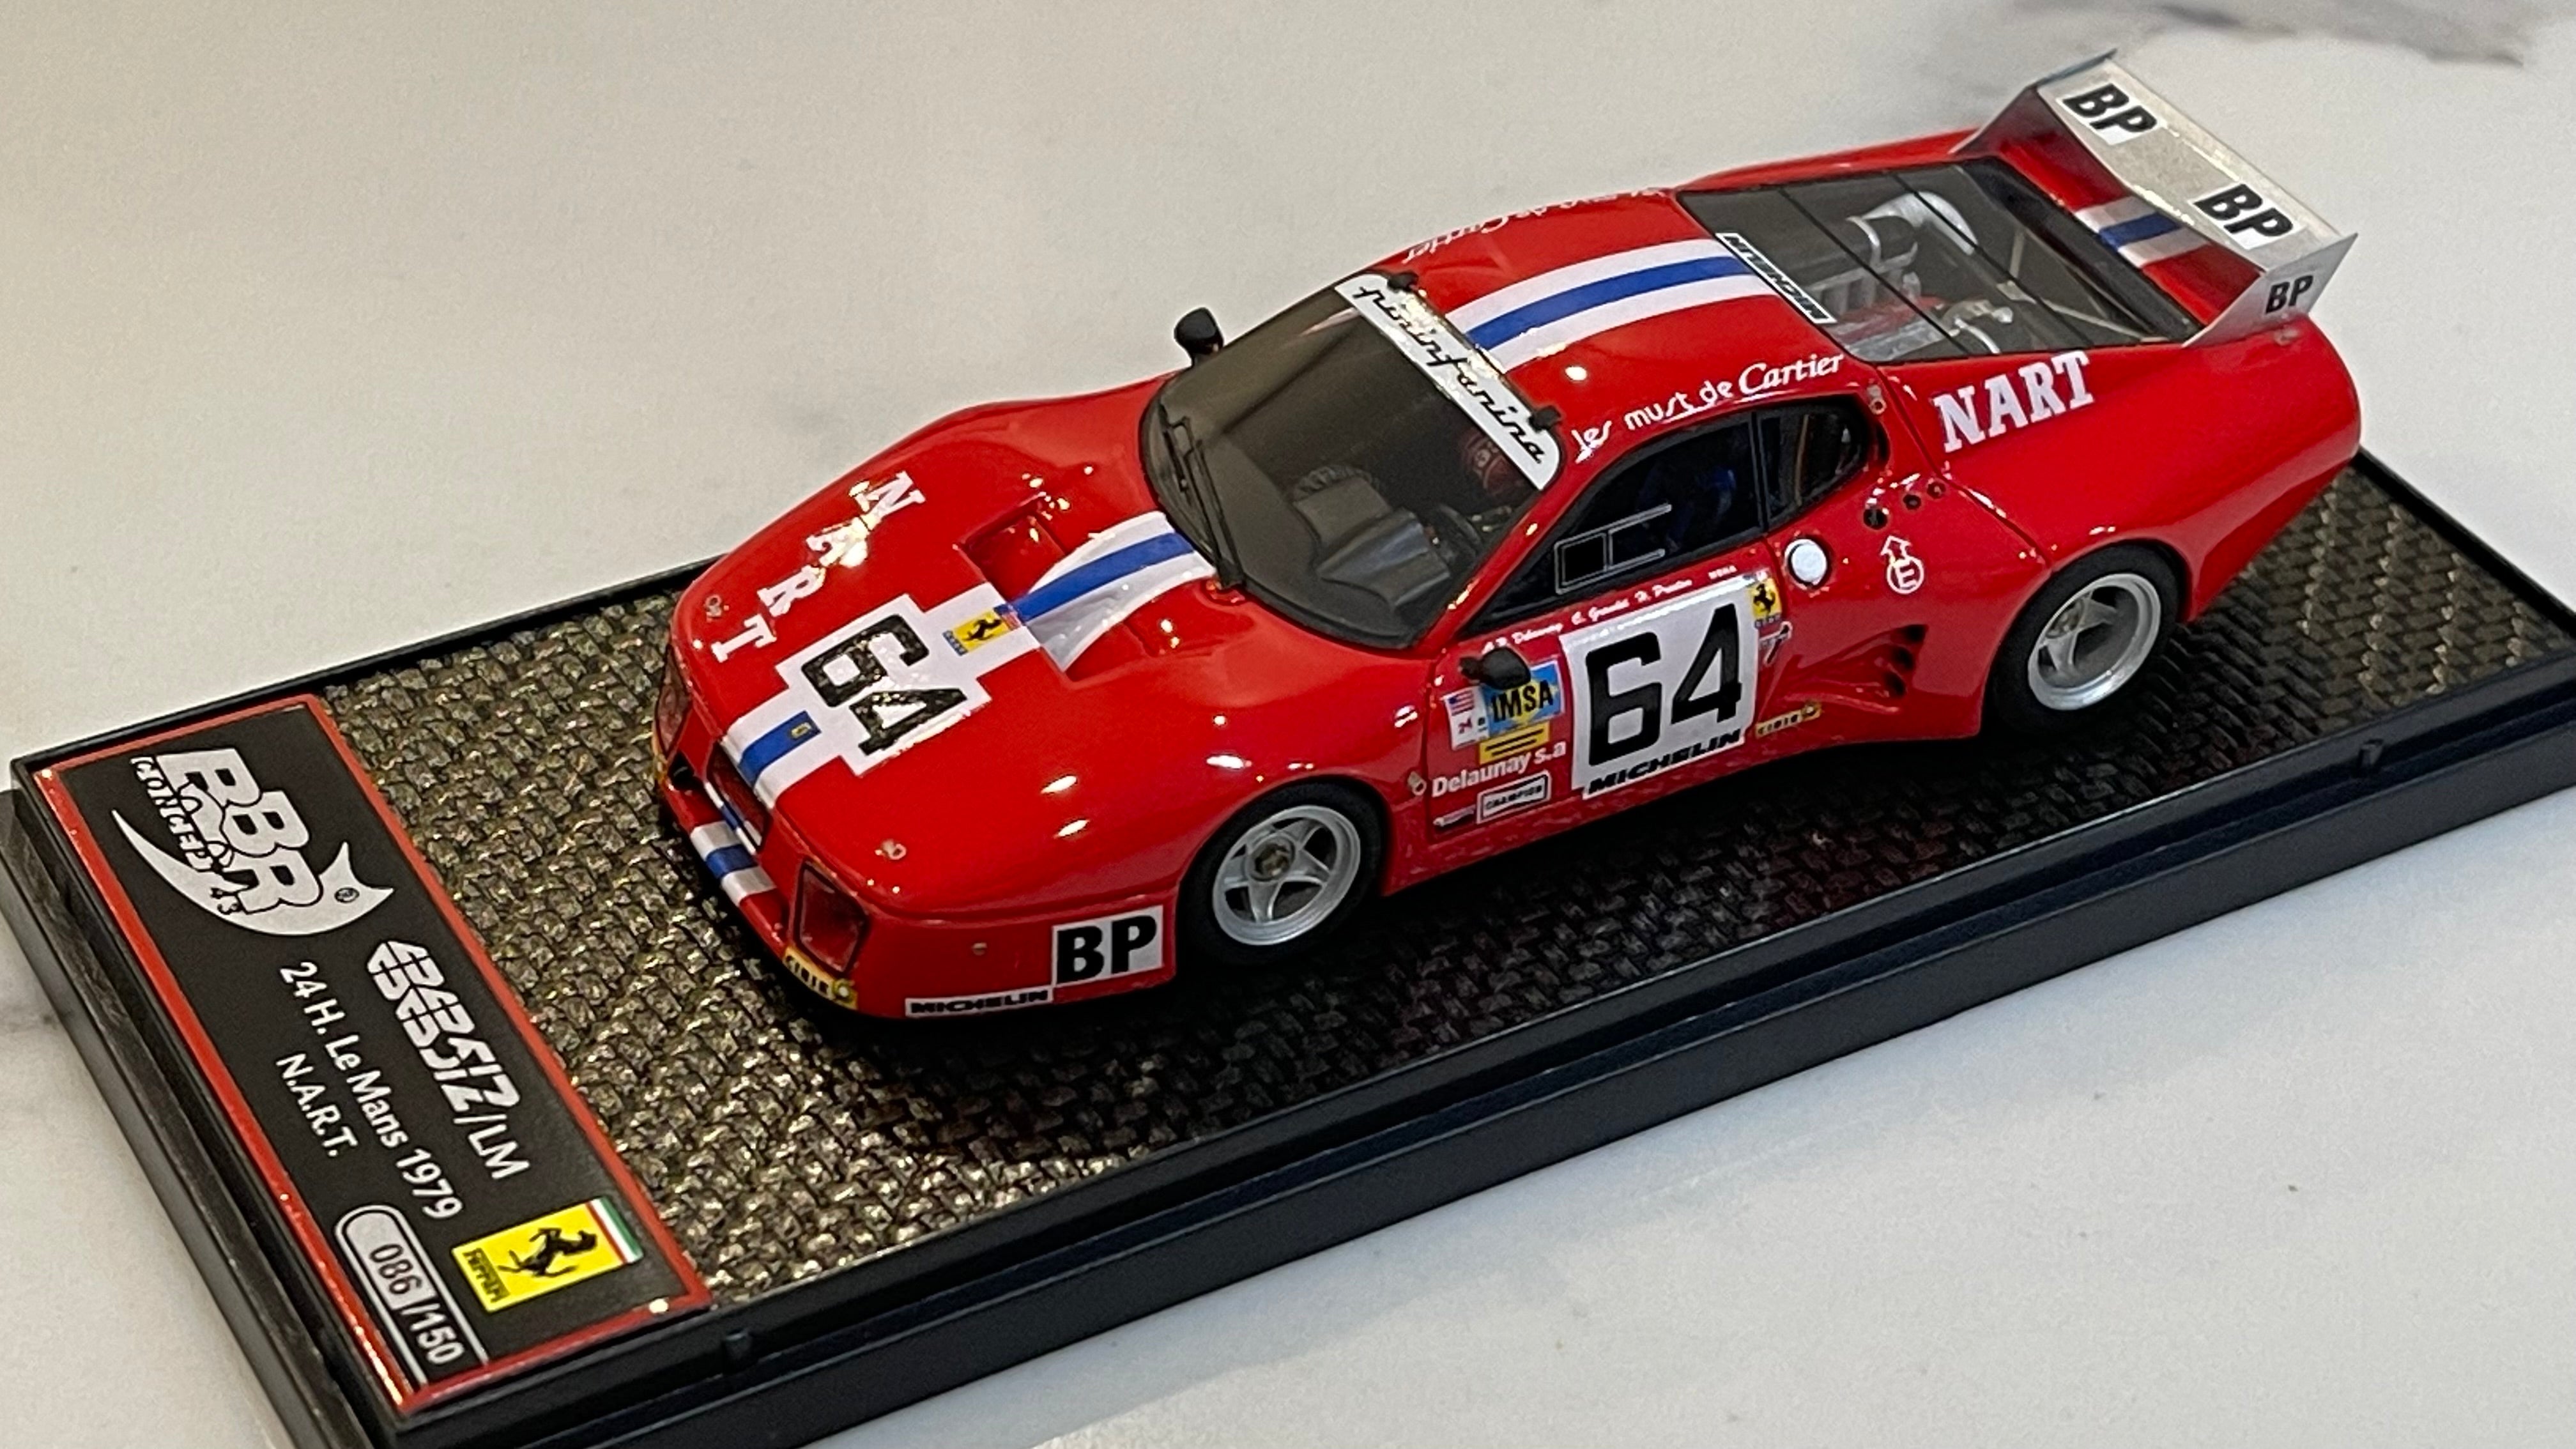 BBR 1/43 Ferrari 512 BBLM 24 Hours Le Mans 1979 Red No. 64 BBRC36 